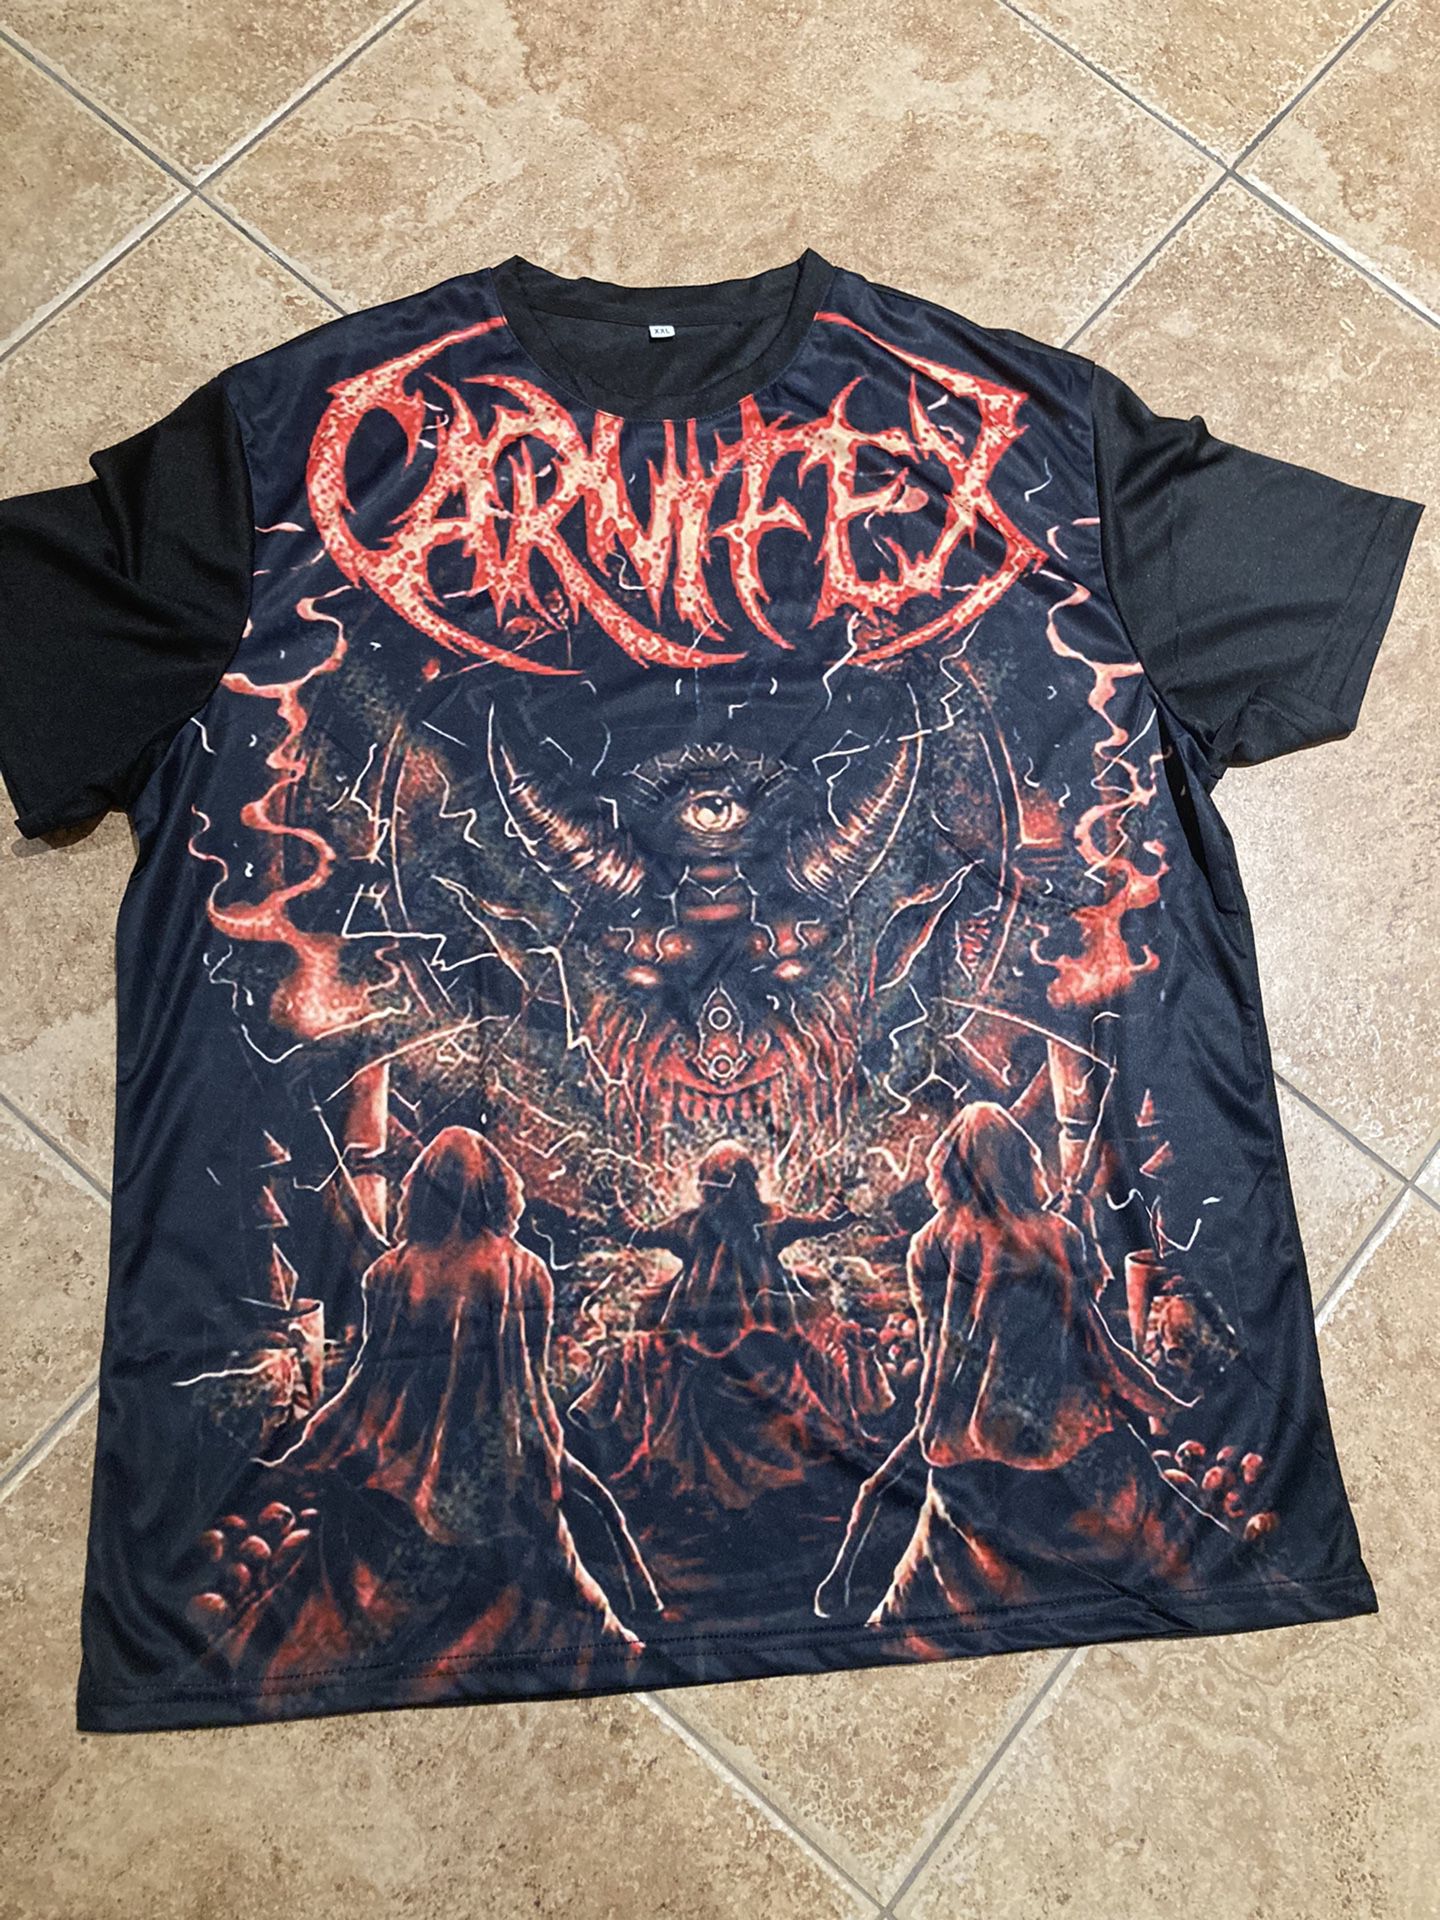 New Xxl Large carnifex Death Metal T Shirt Band Music Men’s 